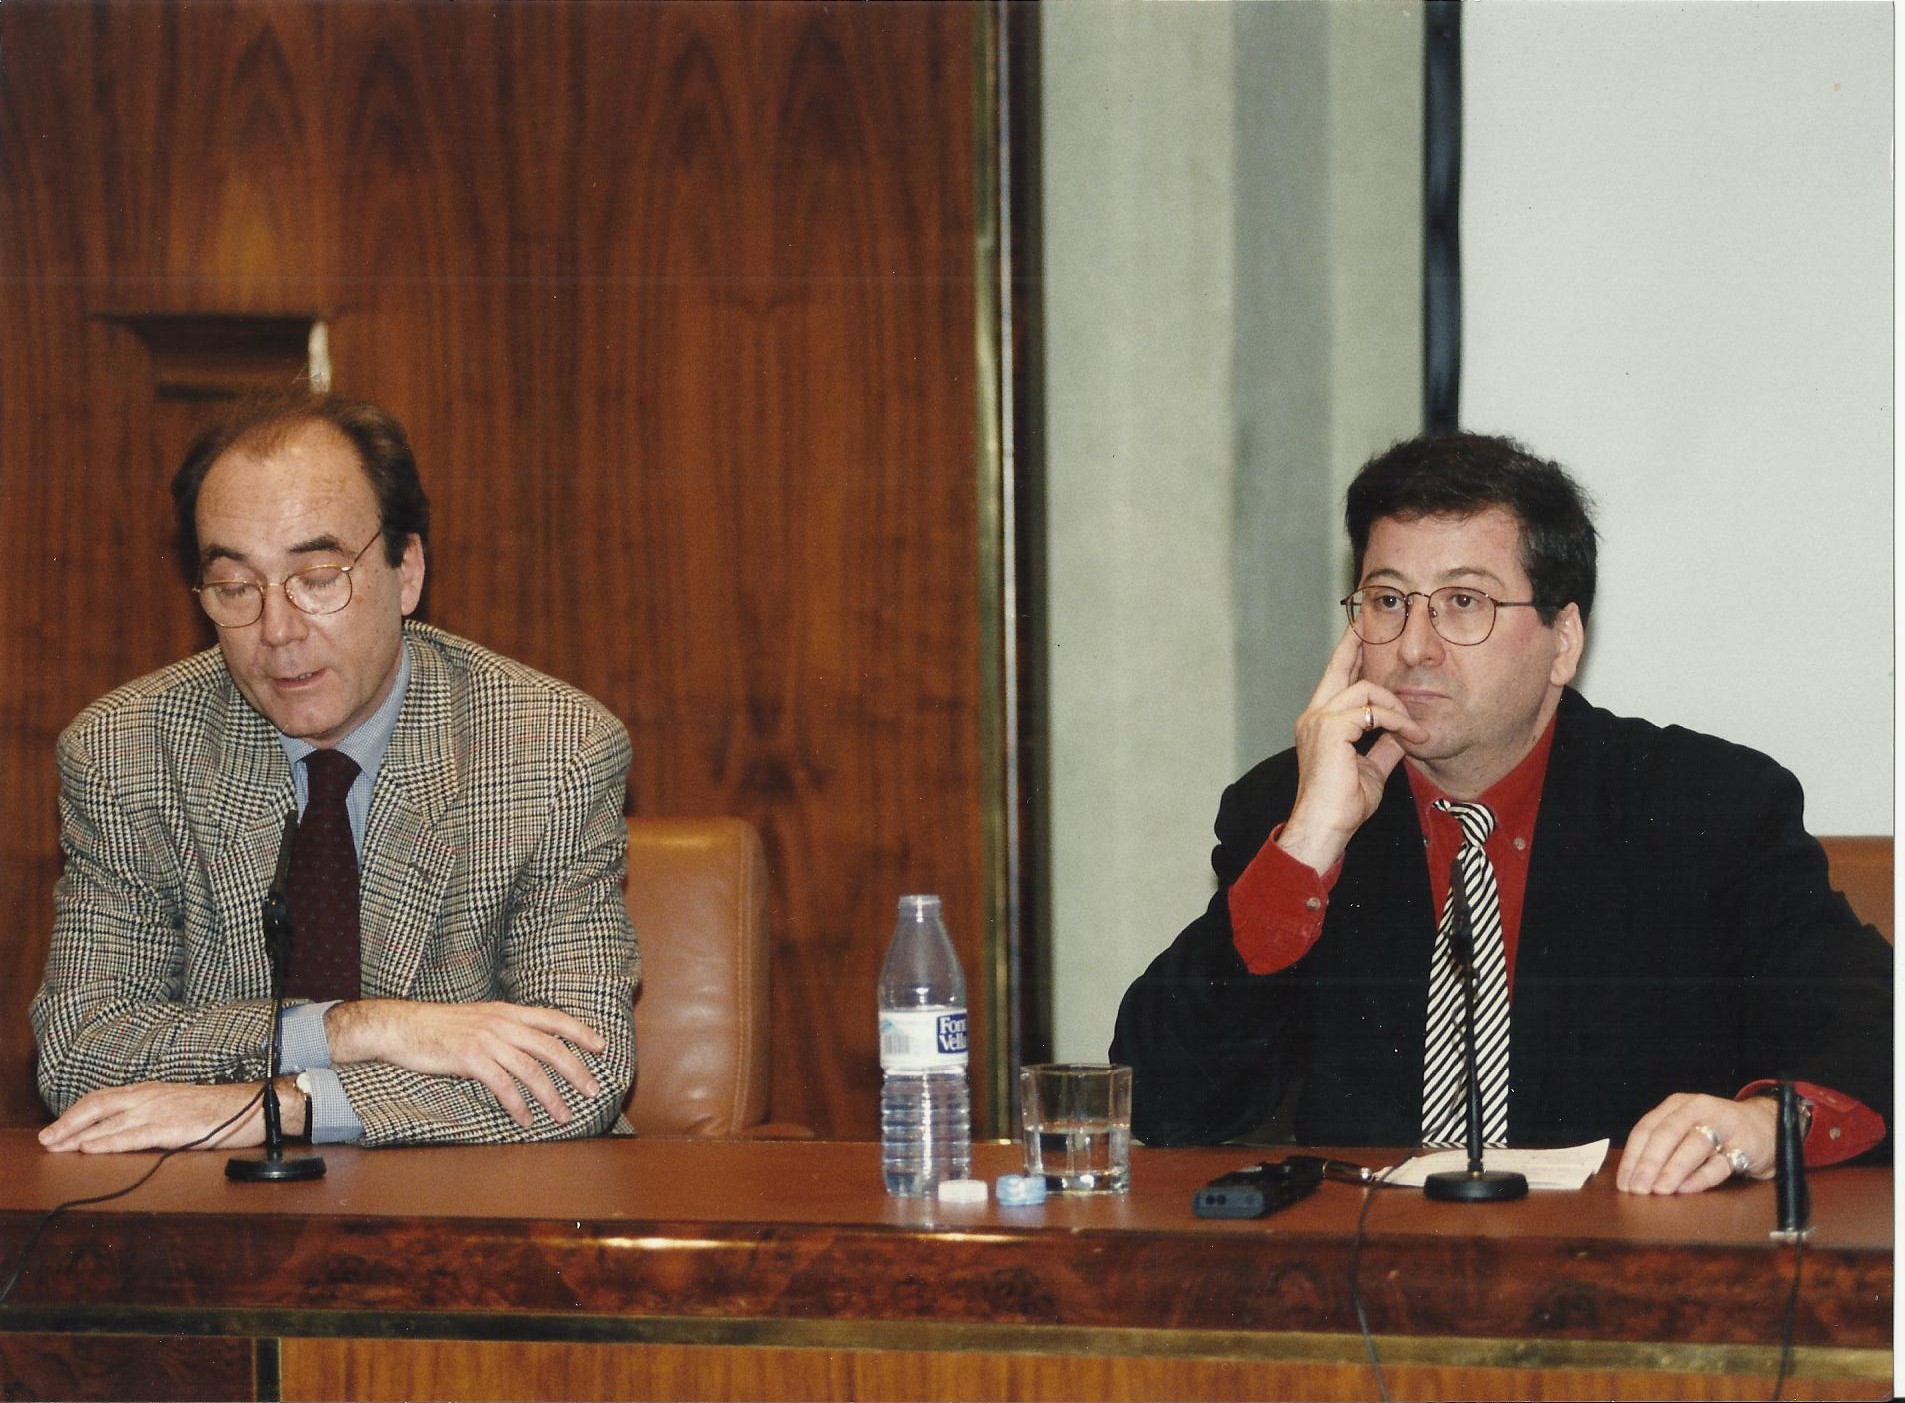 LAdeV y Calvo Serraller, 1996.